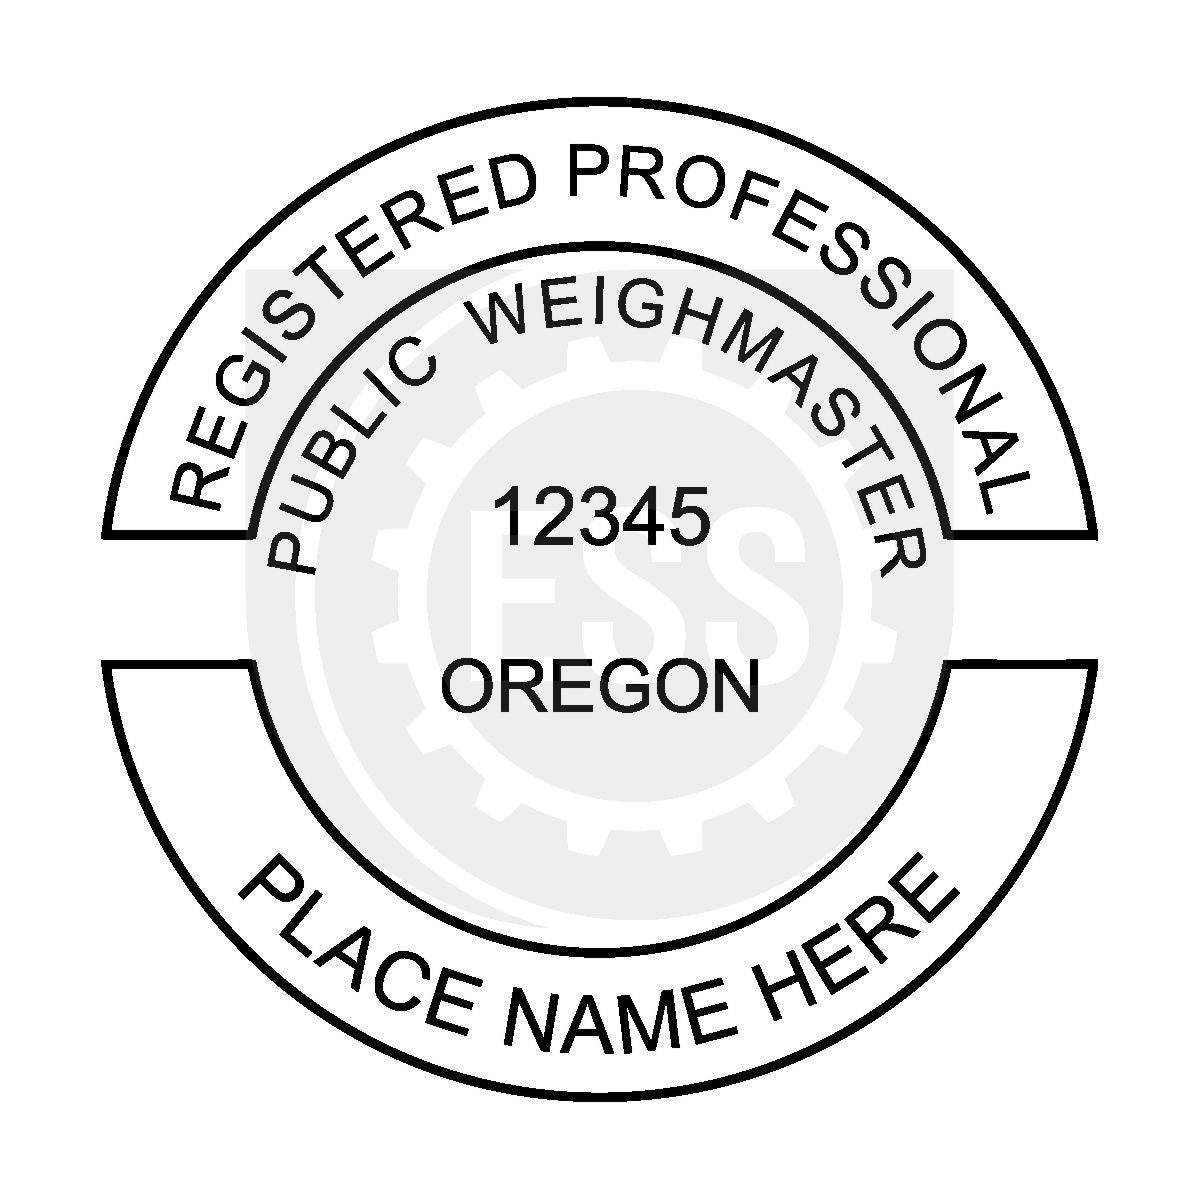 Oregon Public Weighmaster Seal Setup